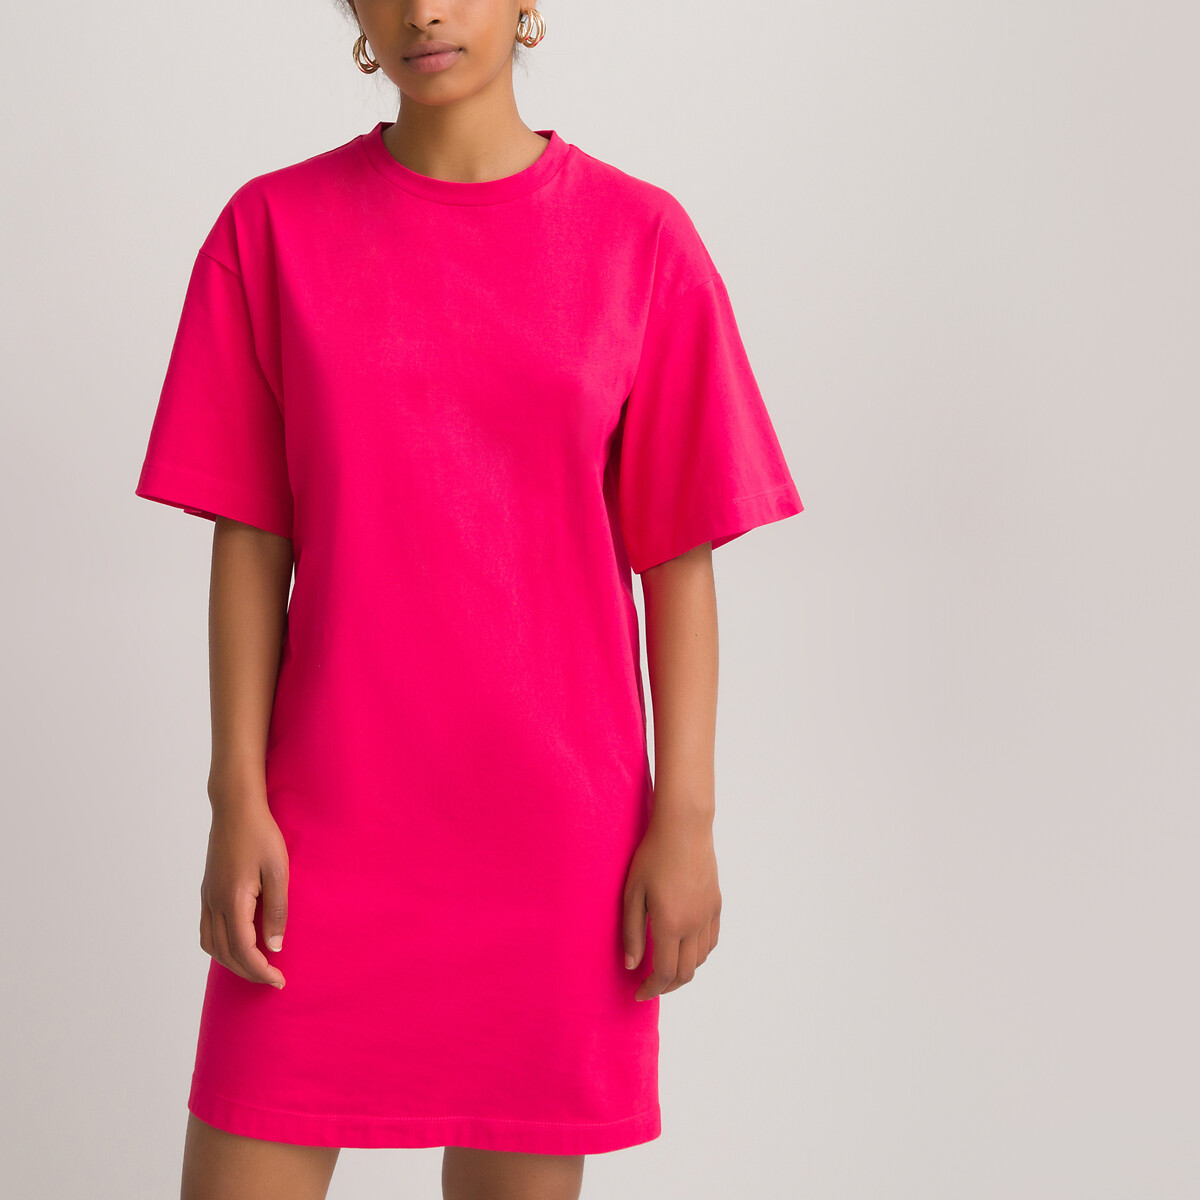 Fashion Dresses Shirt Dresses ivanhoe Shirt Dress pink casual look 